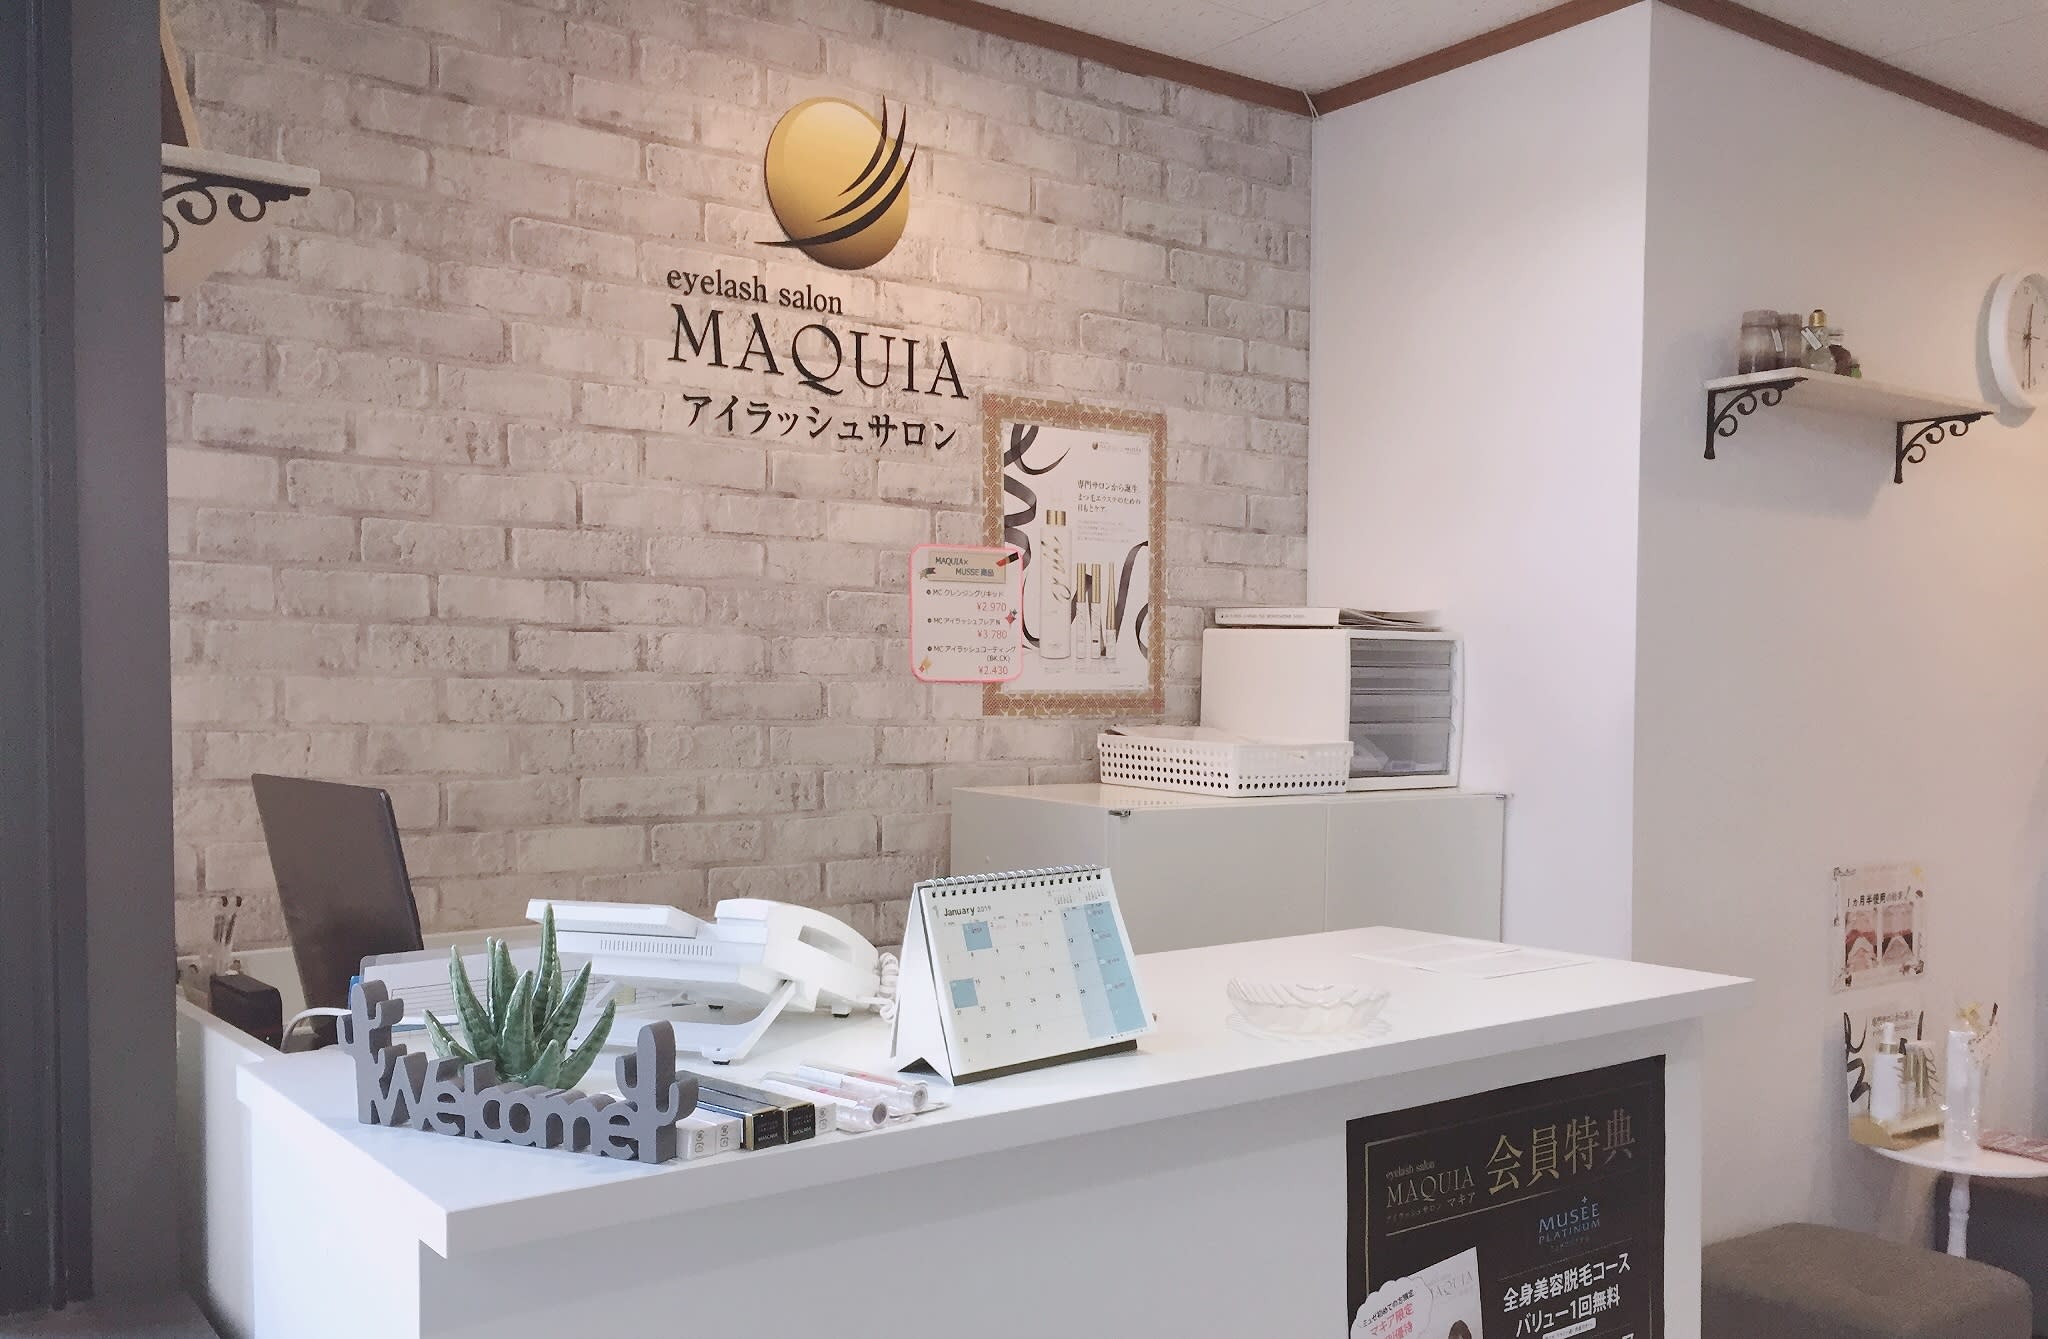 MAQUIA 東金店のアイキャッチ画像